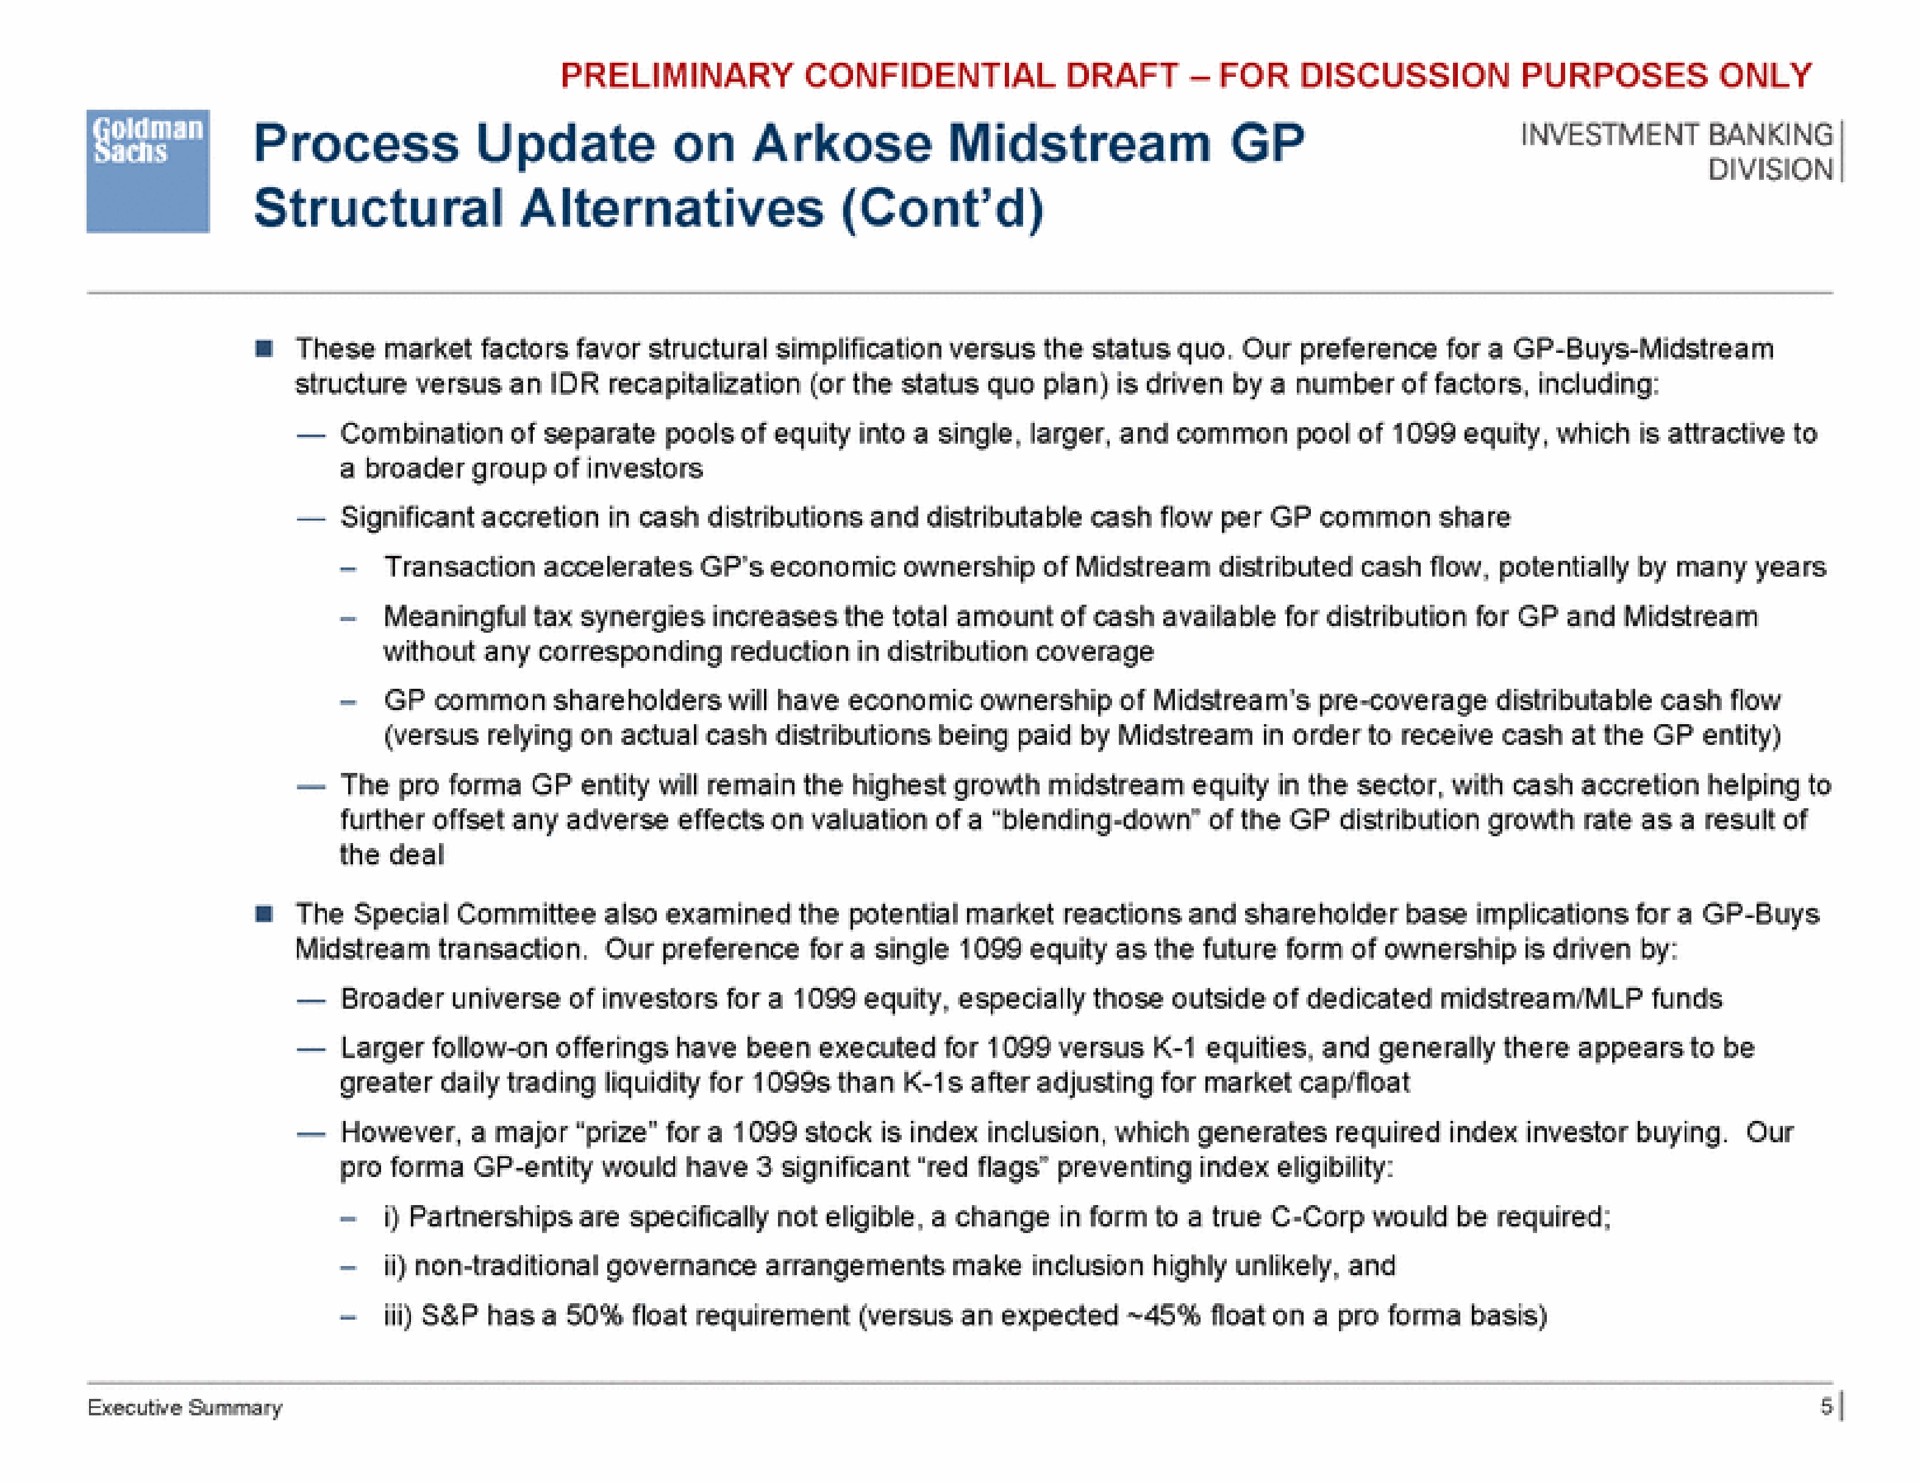 process update on arkose midstream structural alternatives | Goldman Sachs